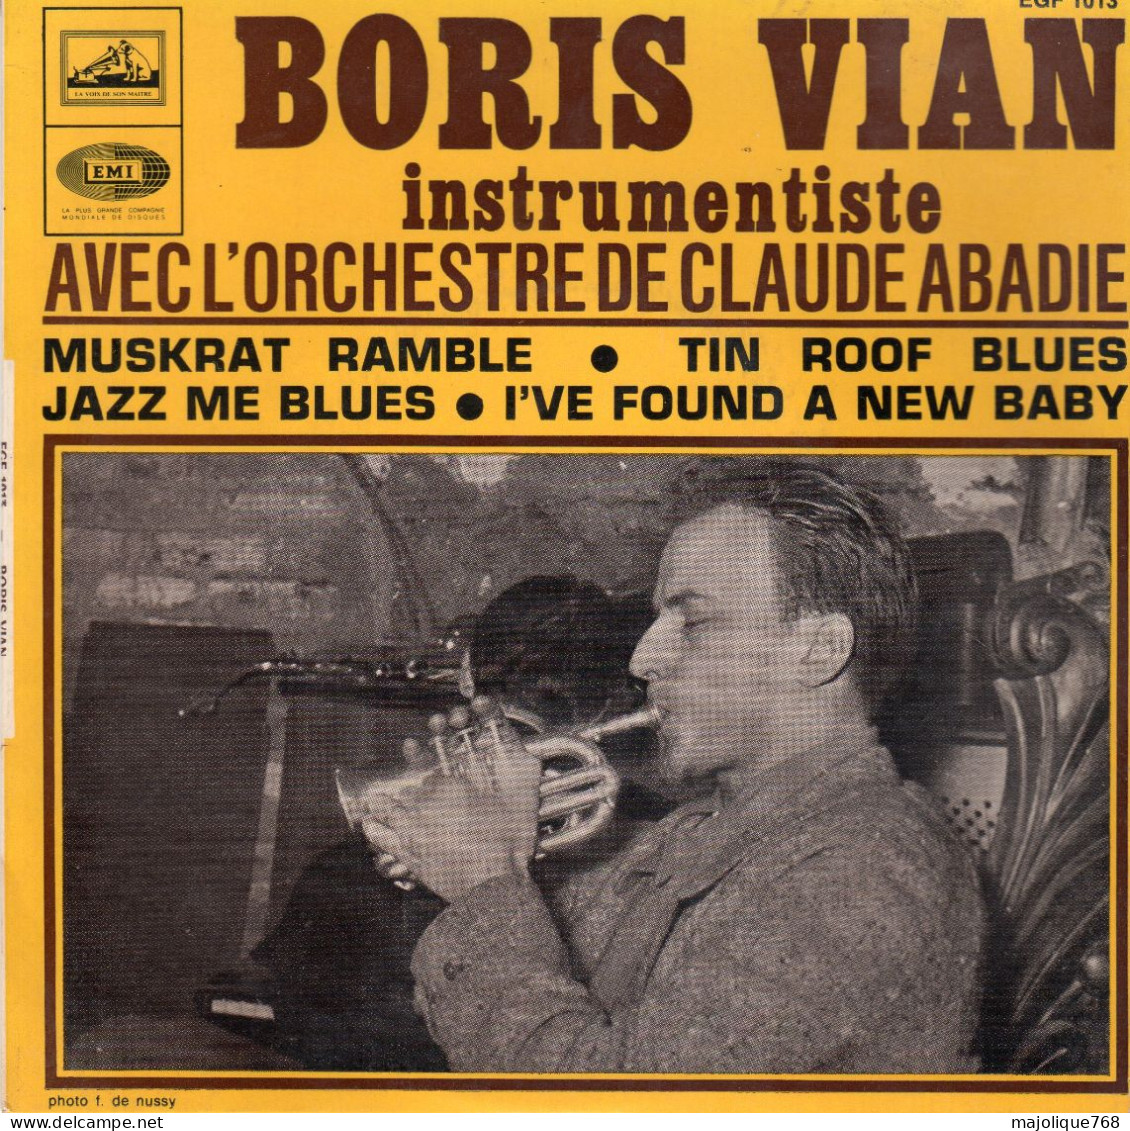 Disque 45T - De Boris Vian Avec L'Orchestre De Claude Abadie* – Boris Vian Instrume - Muskrat Ramble -  EGF 1013 - - Jazz